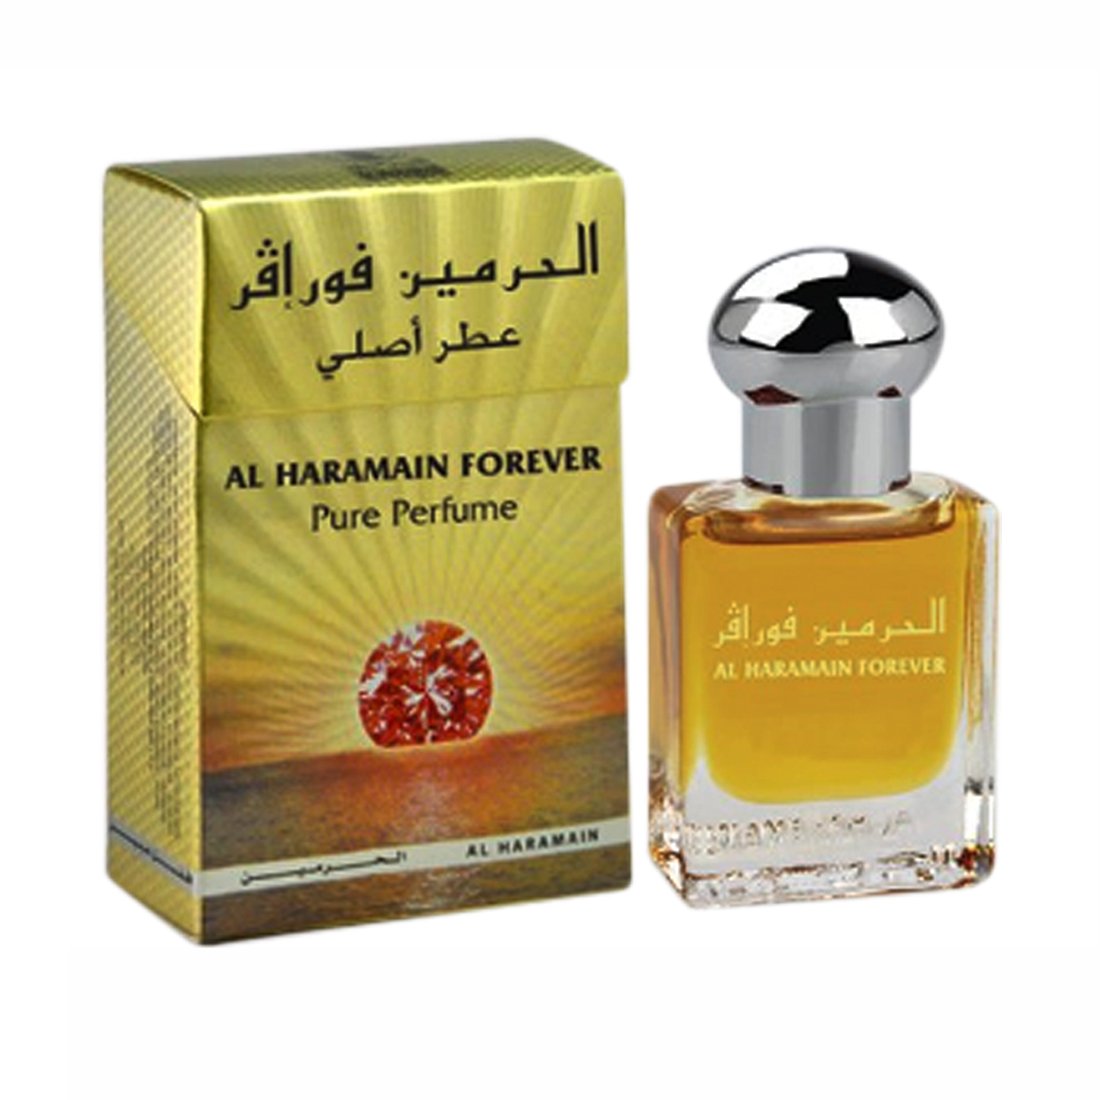 Al Haramain Forever Fragrance Pure Original Roll on Perfume Oil (Attar) - 15 ml